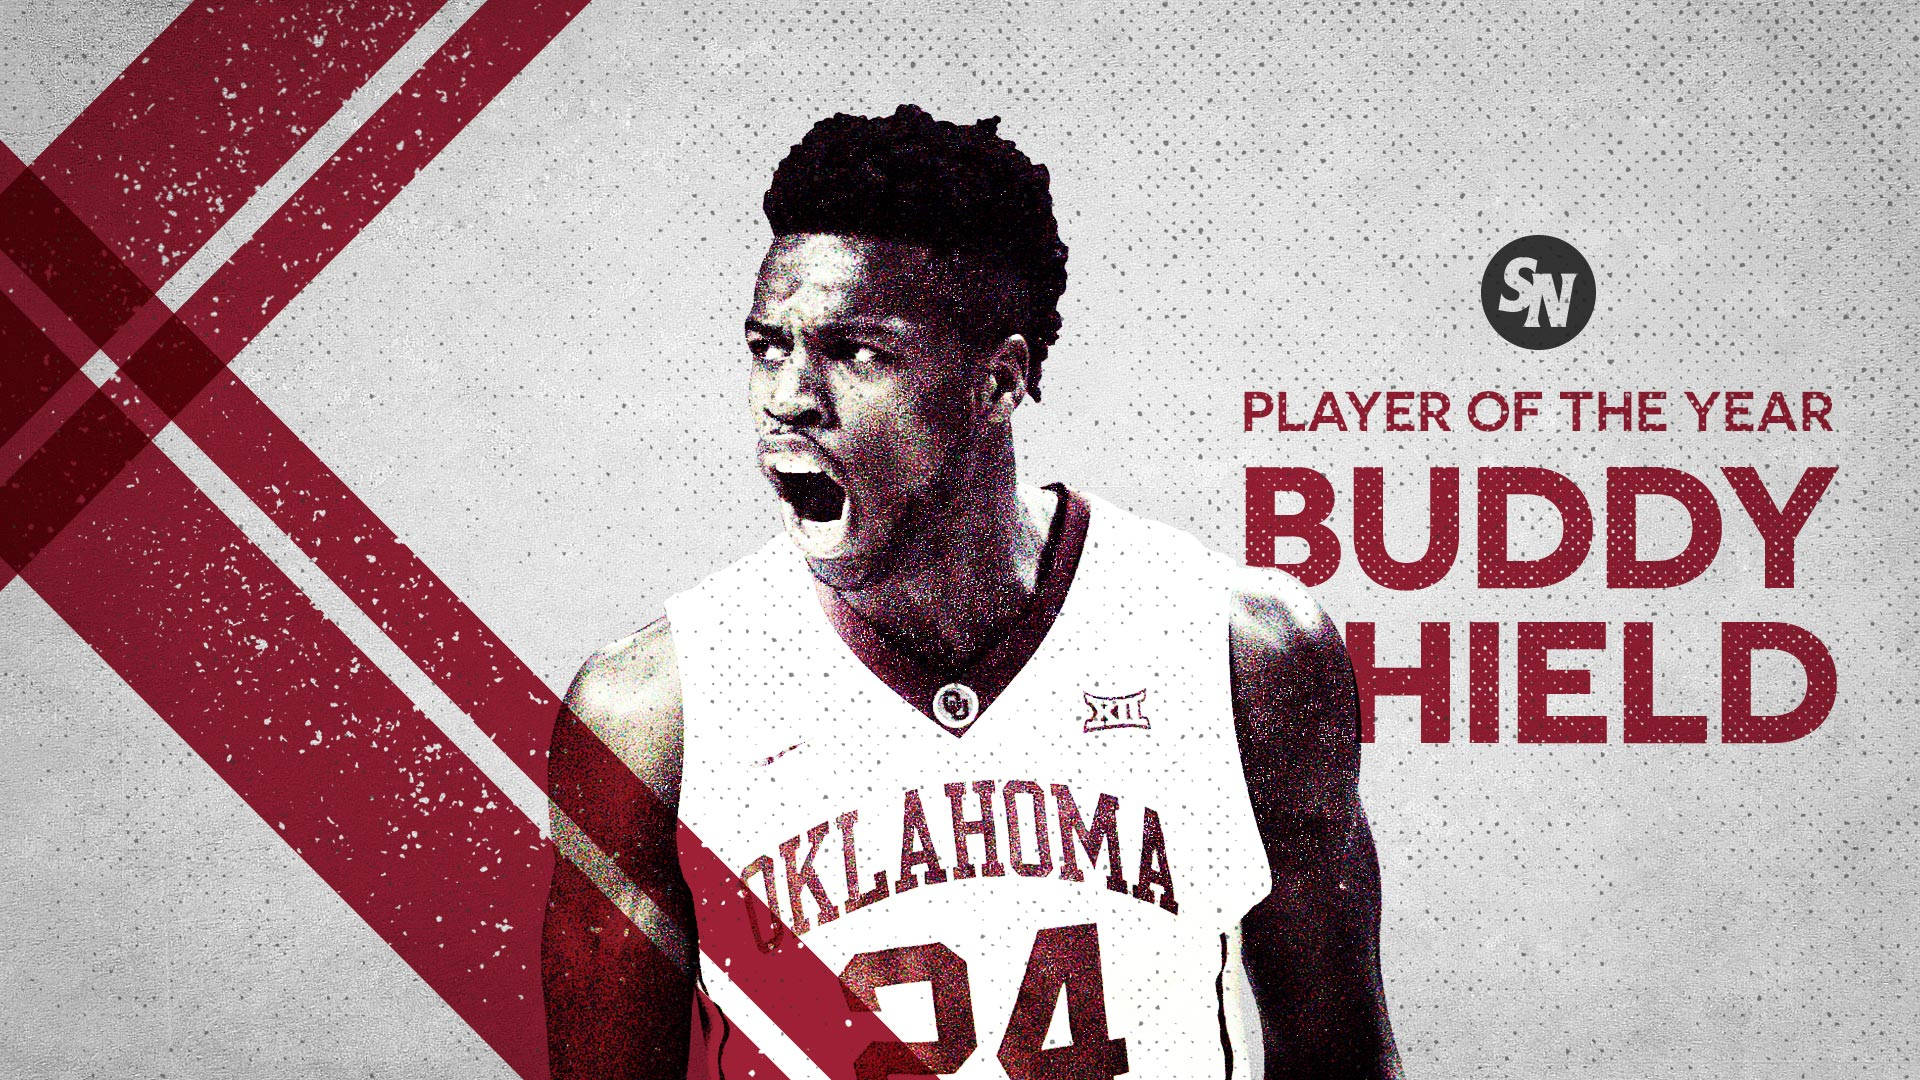 Oklahoma Buddy Hield Digital Cover Background